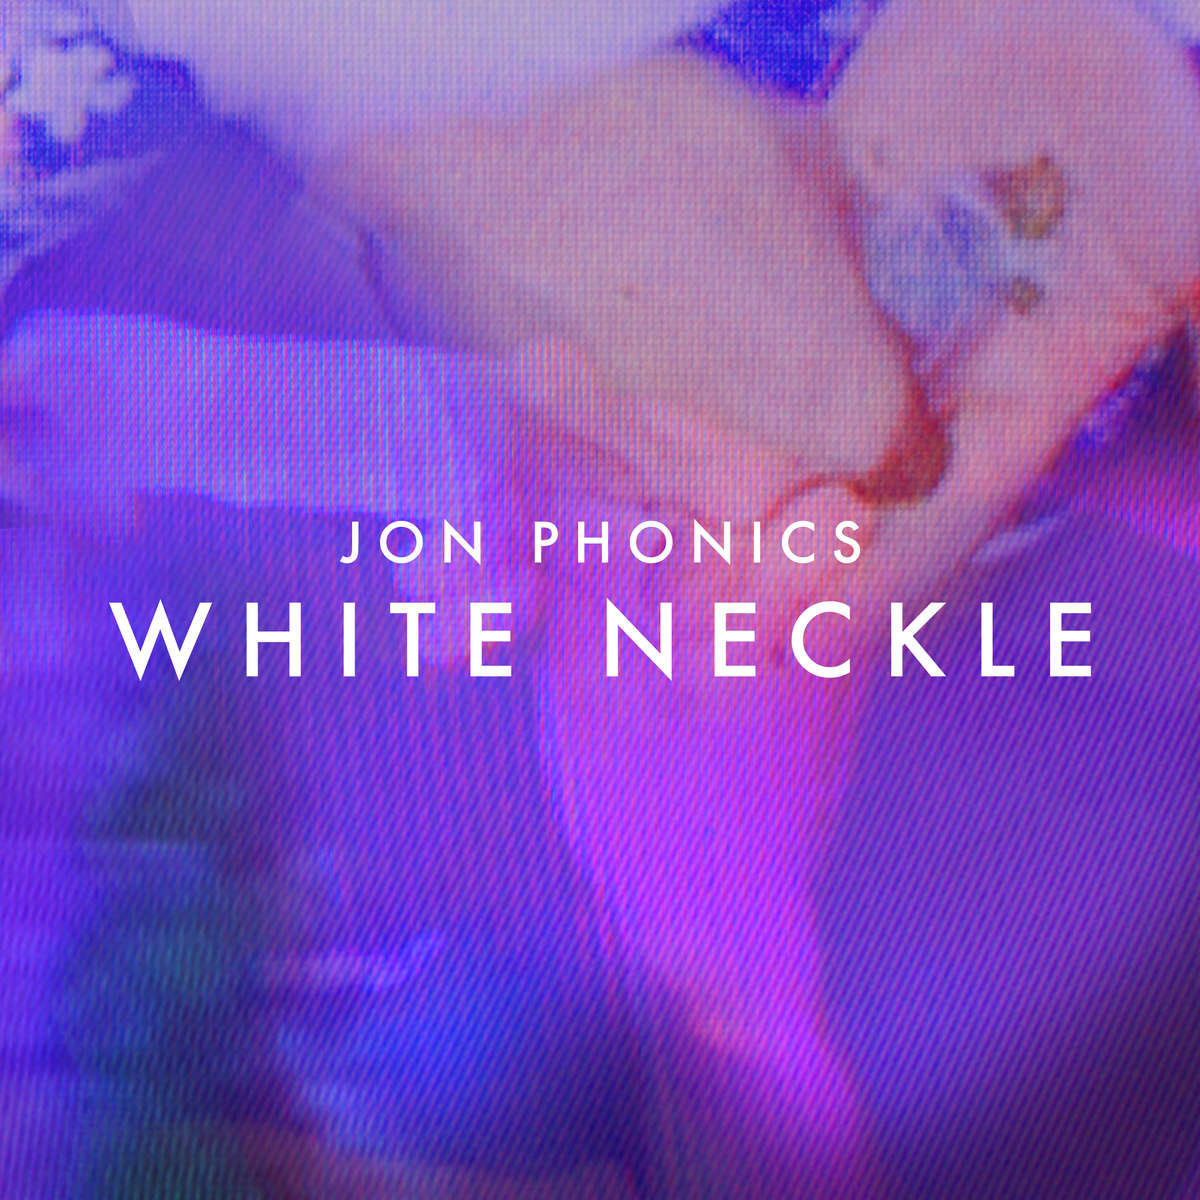 Jon Phonics "White Neckle" Release | @JONPHONICS